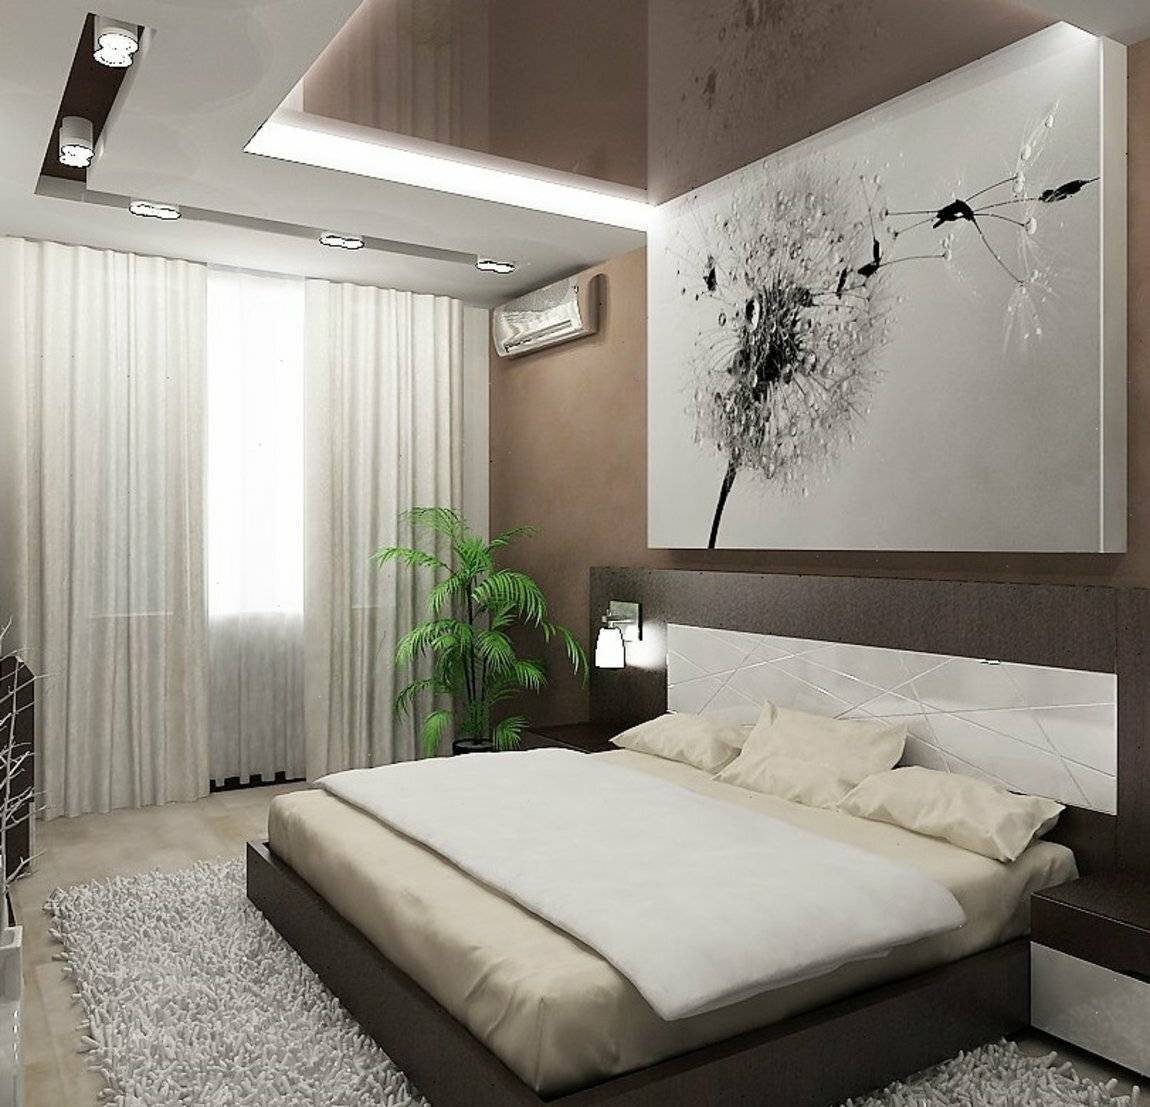 Идеи дизайна спальни - 180 фото новинок интерьера спальни 2020 года